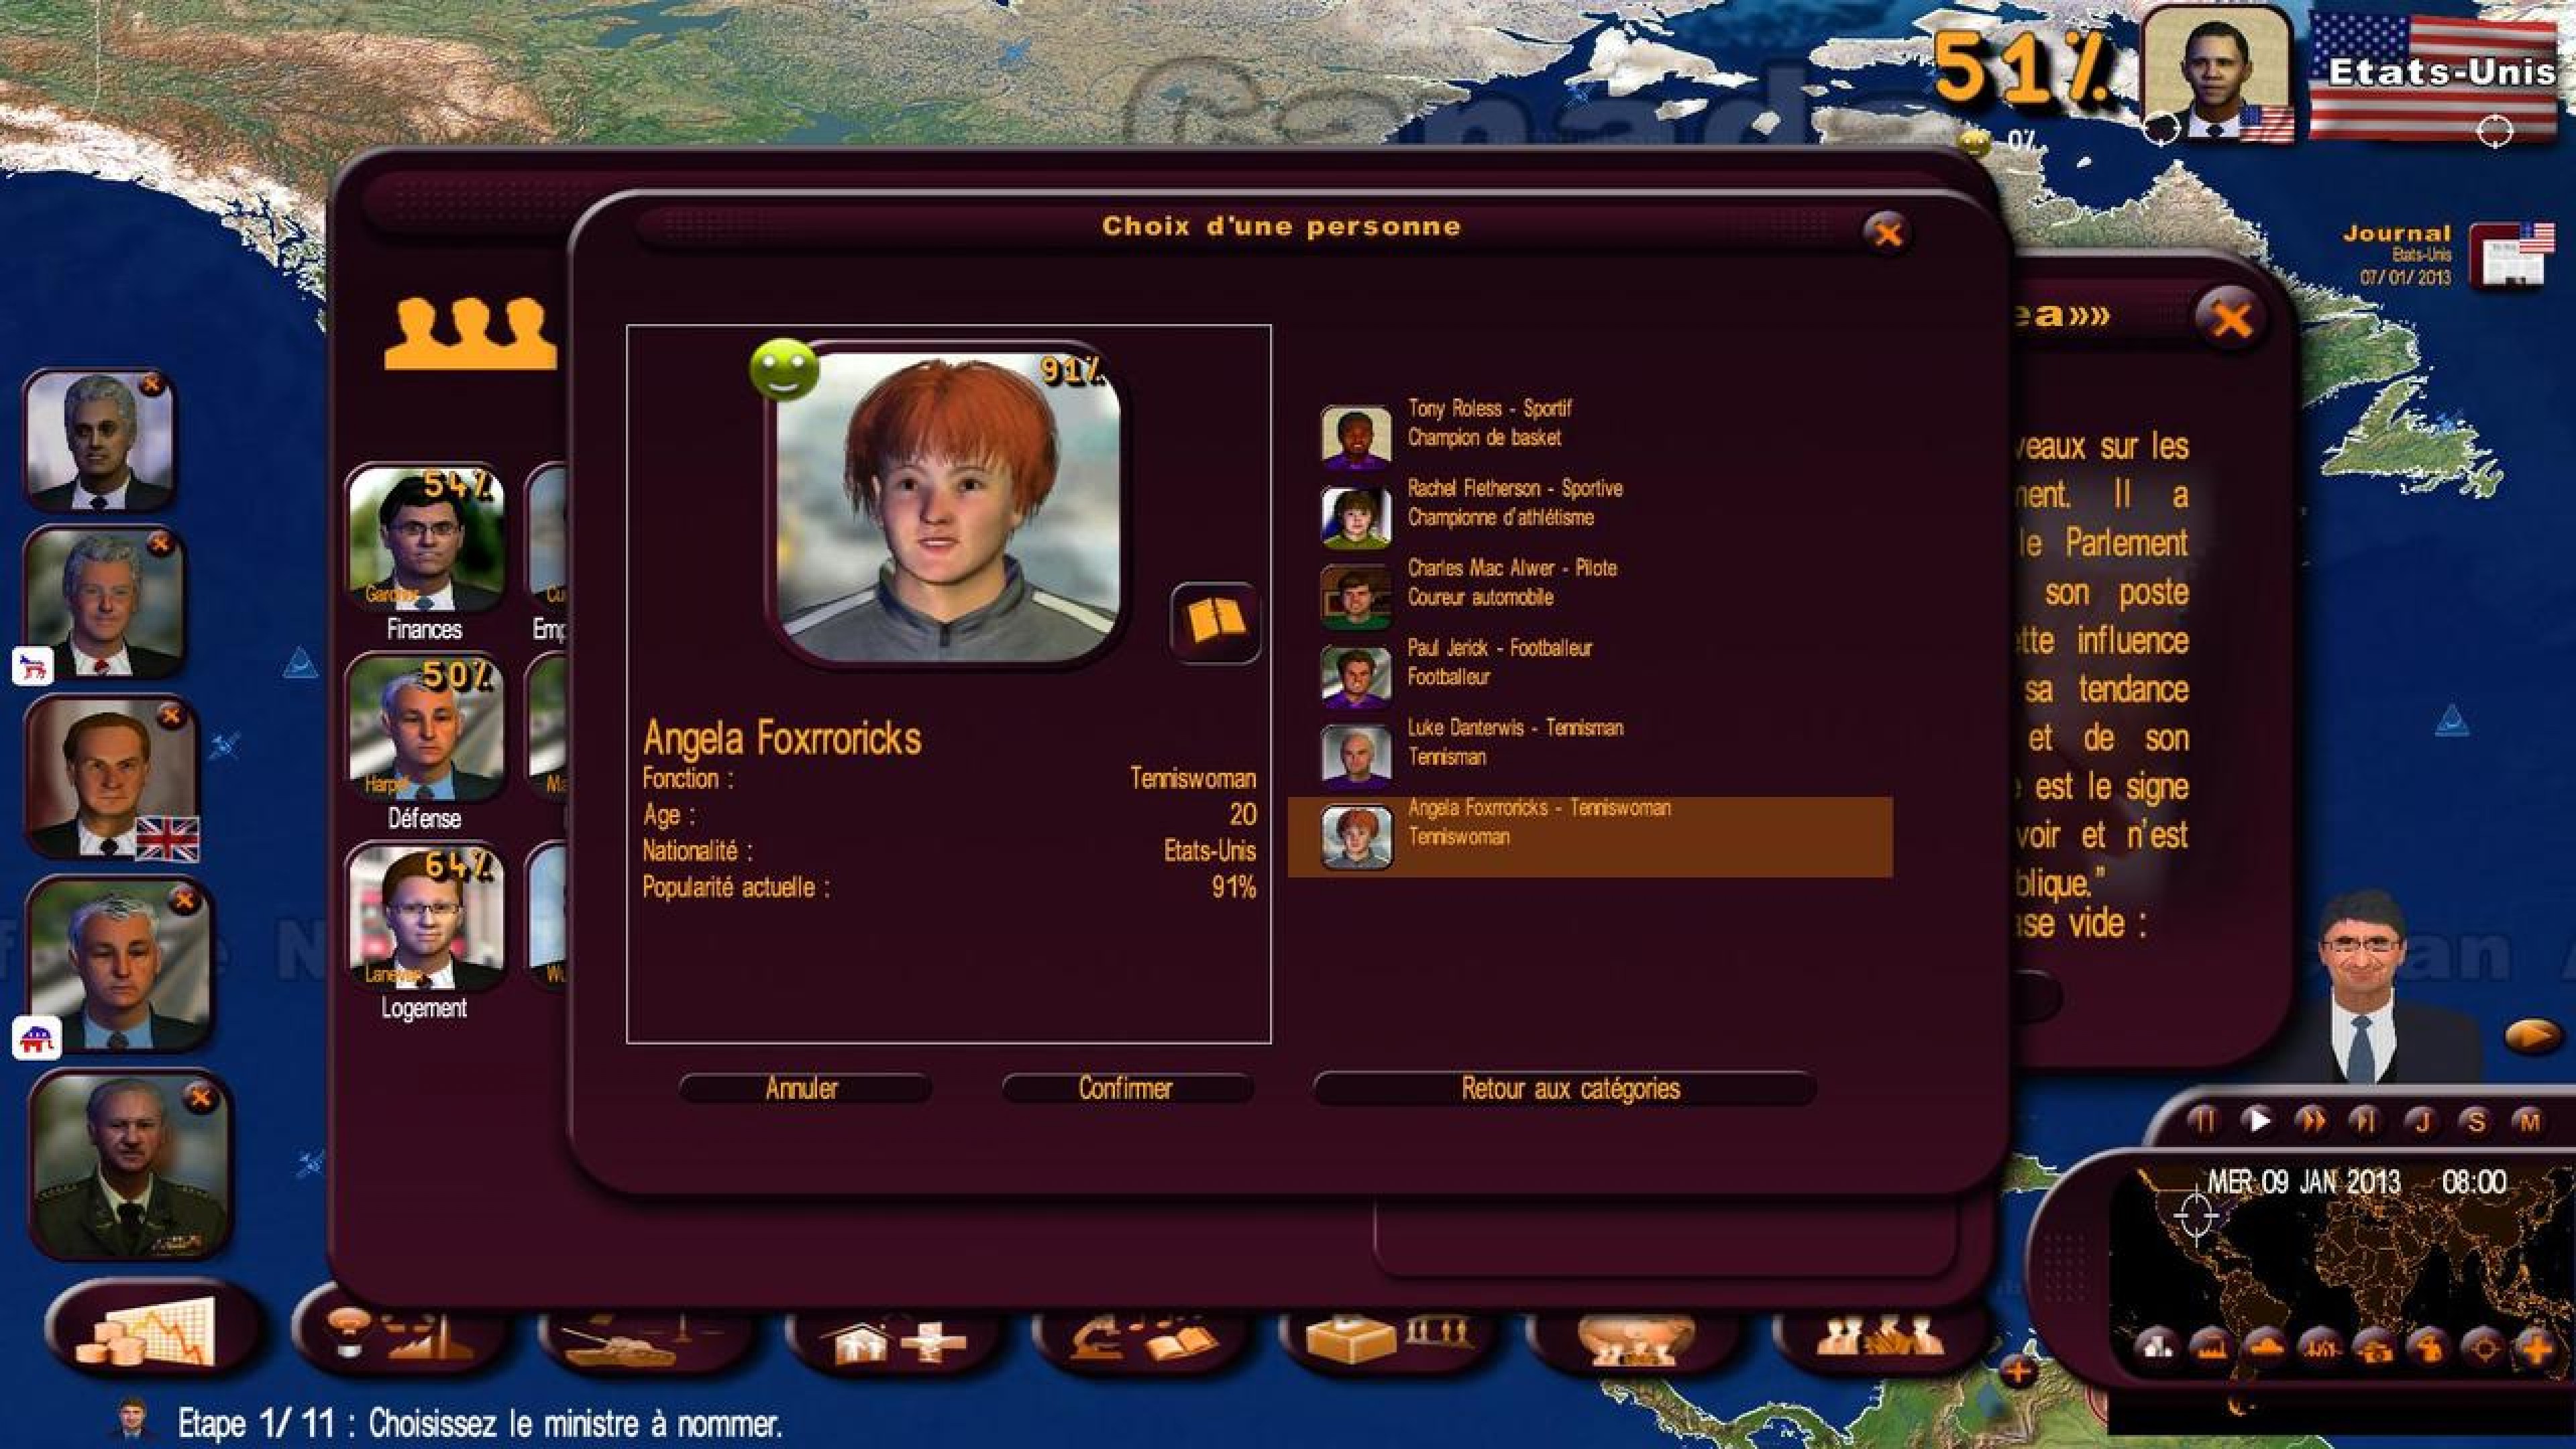 download free geopolitical simulator 4 mac